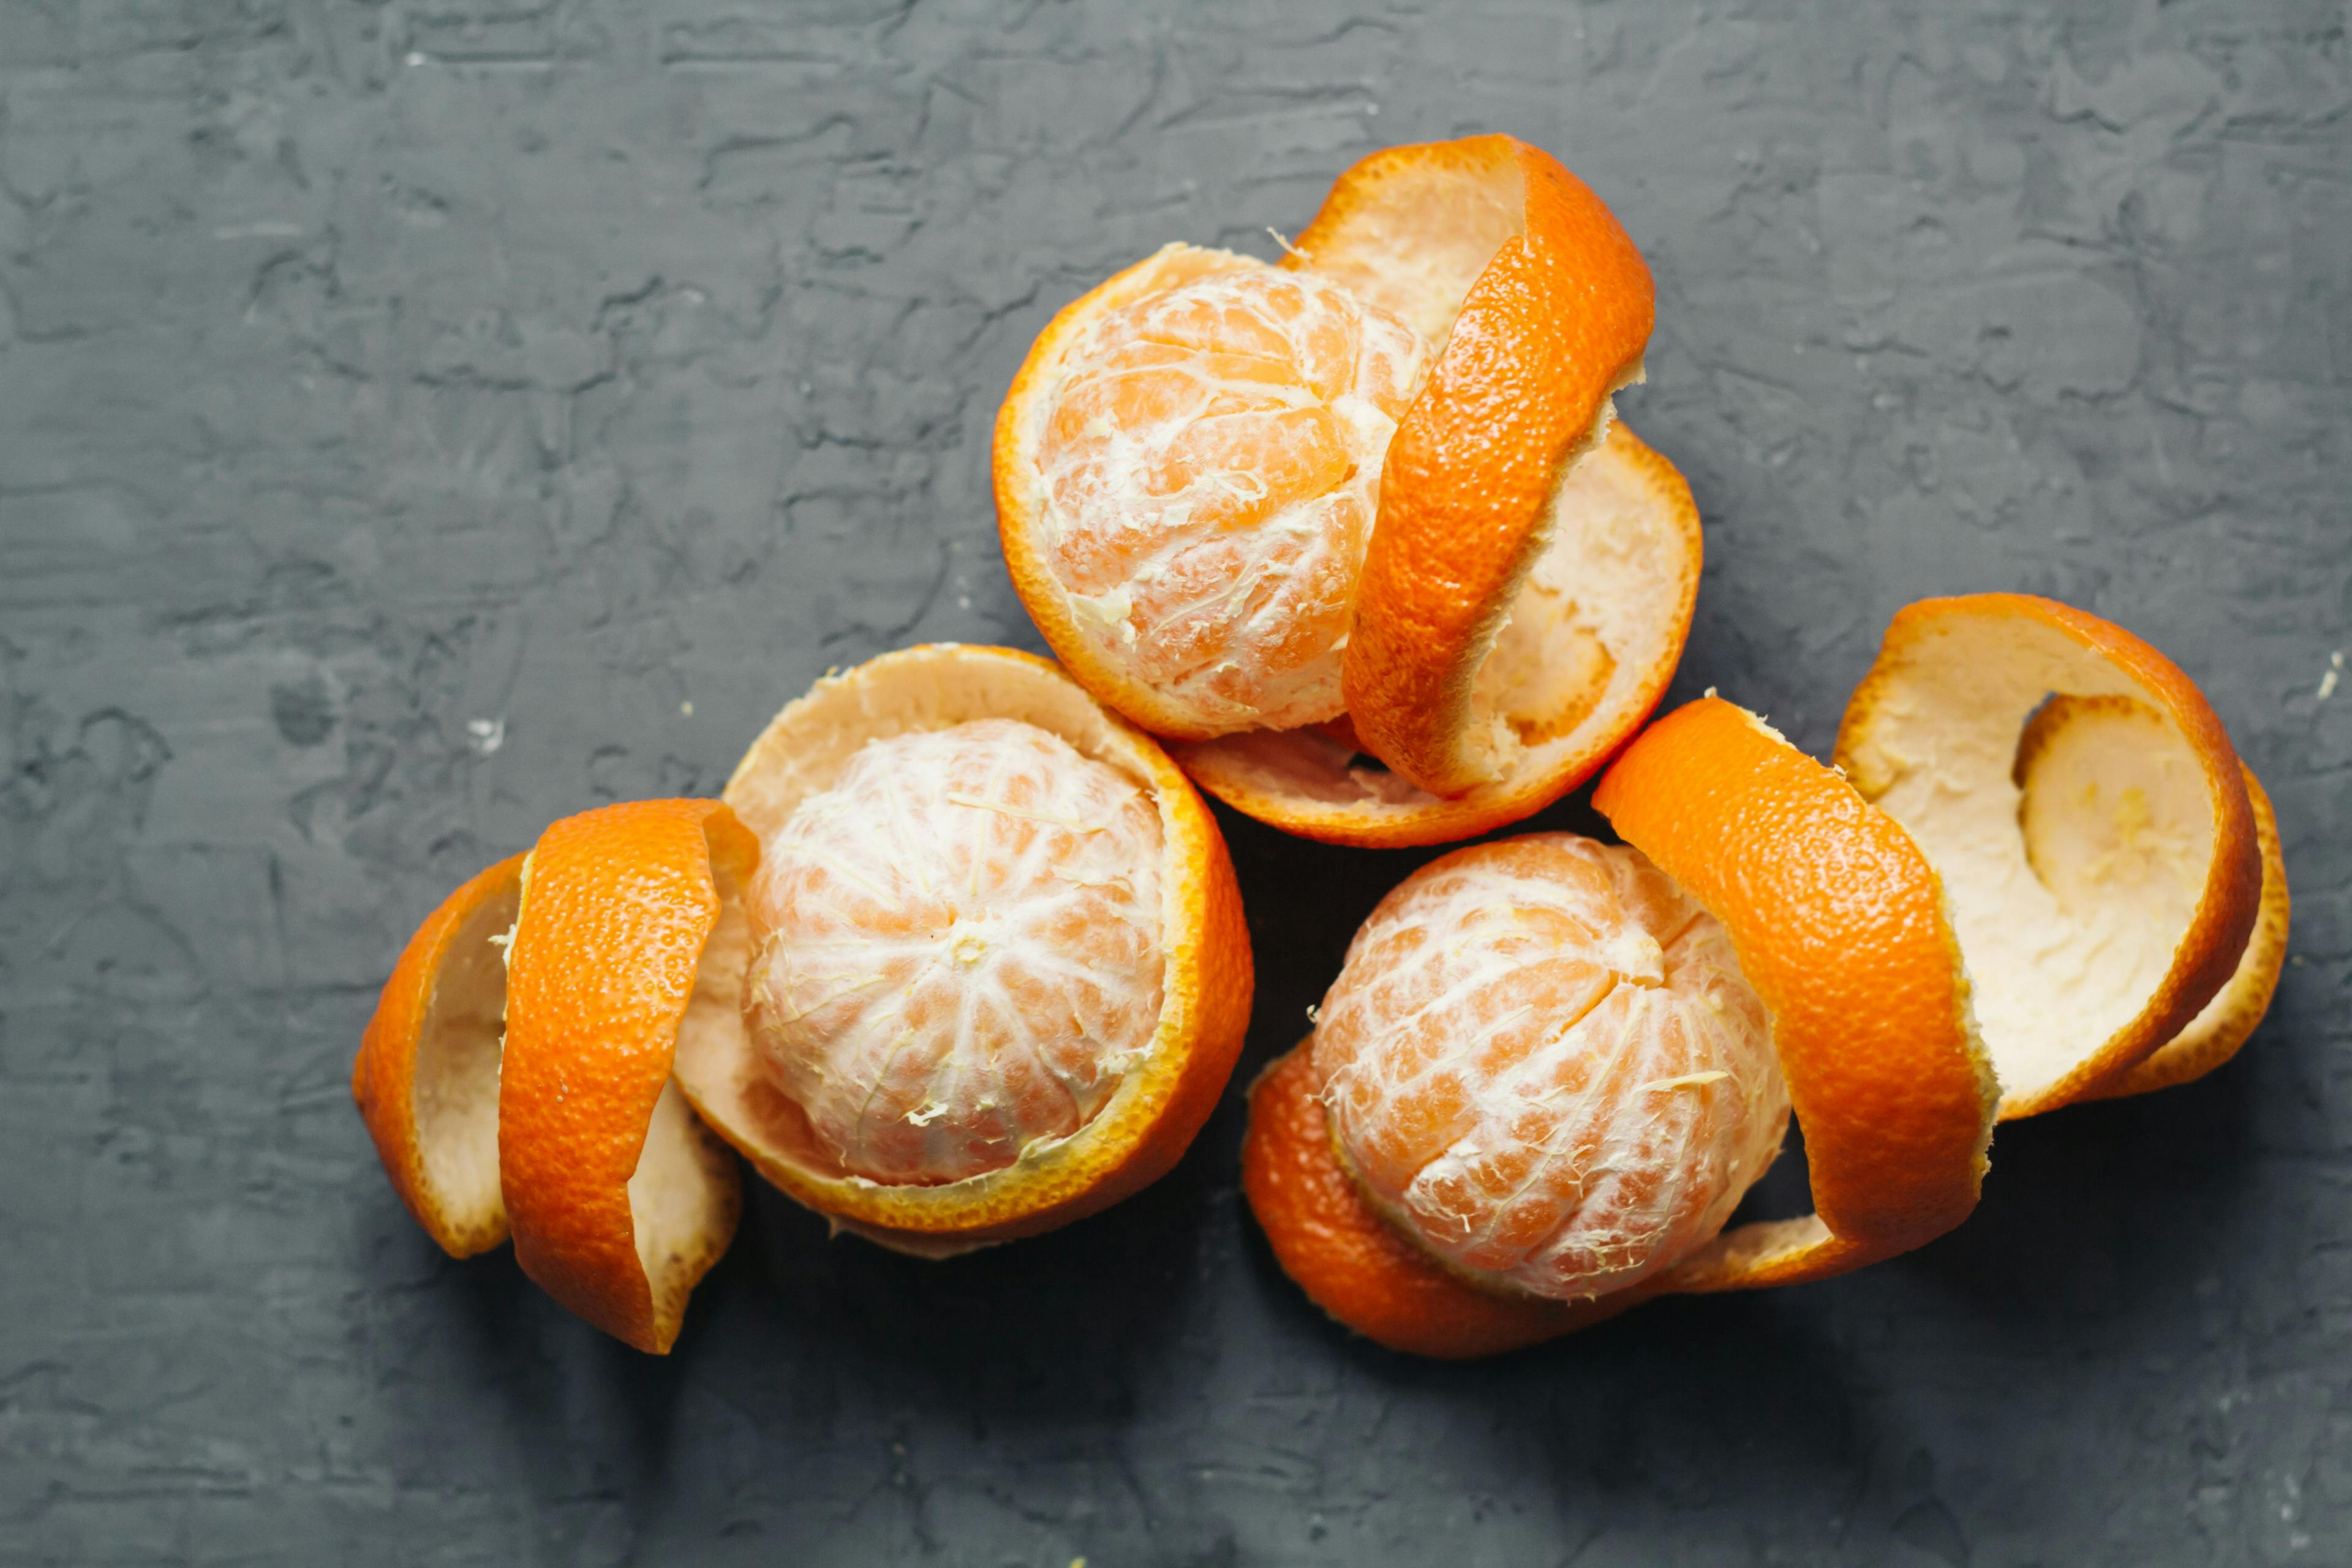 orange peel | Image Credit: Kseniia - stock.adobe.com